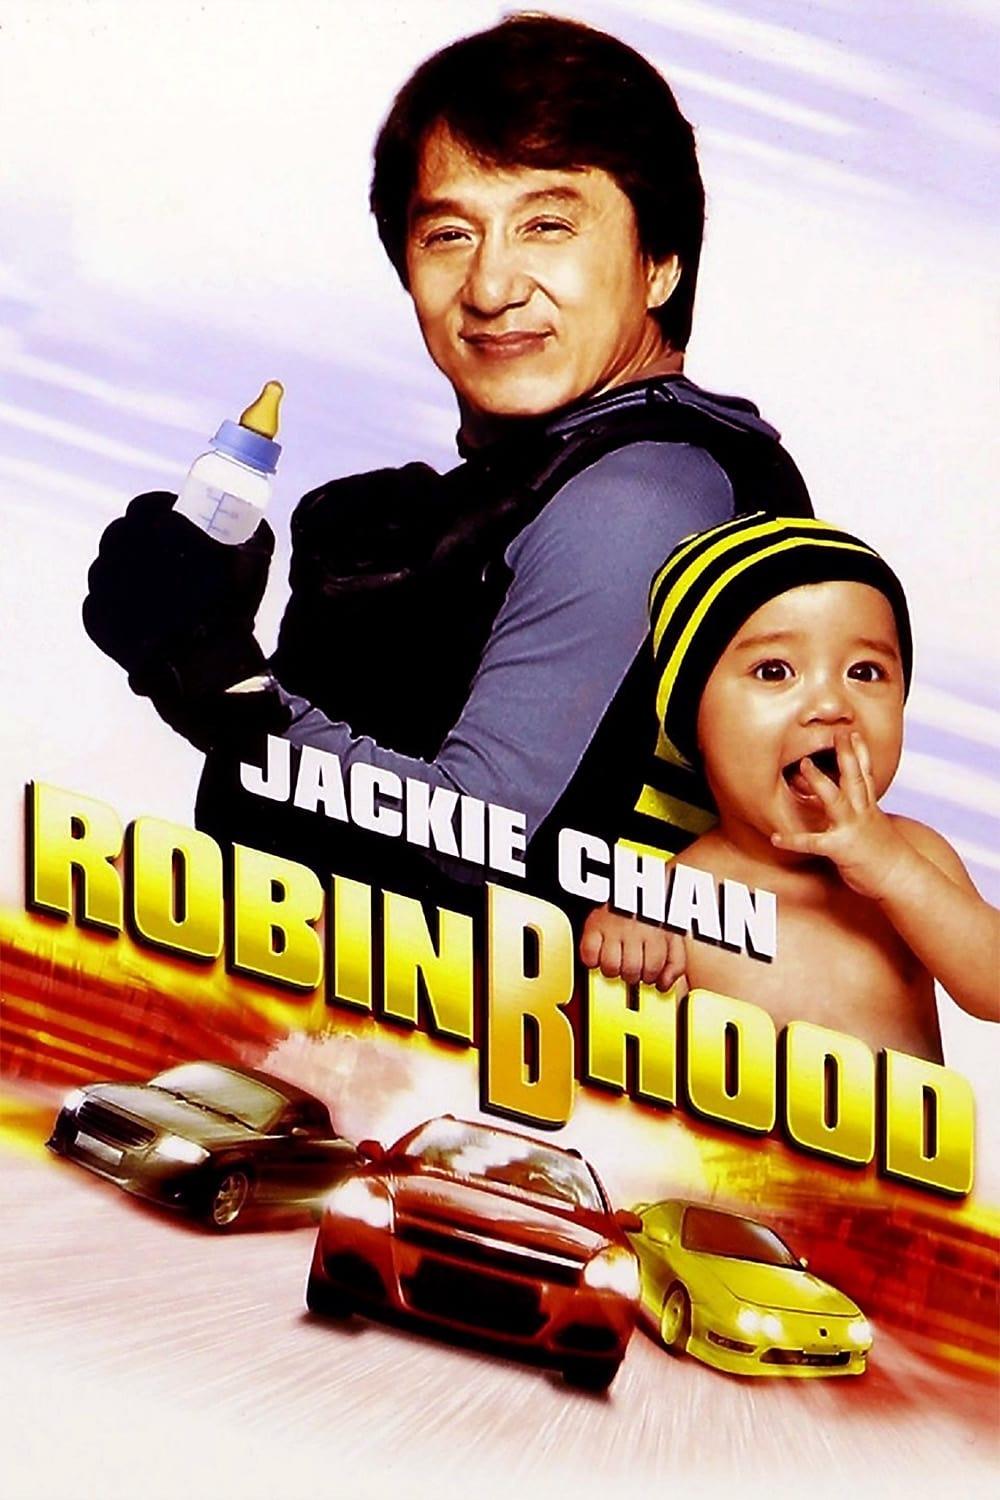 Robin-B-Hood poster